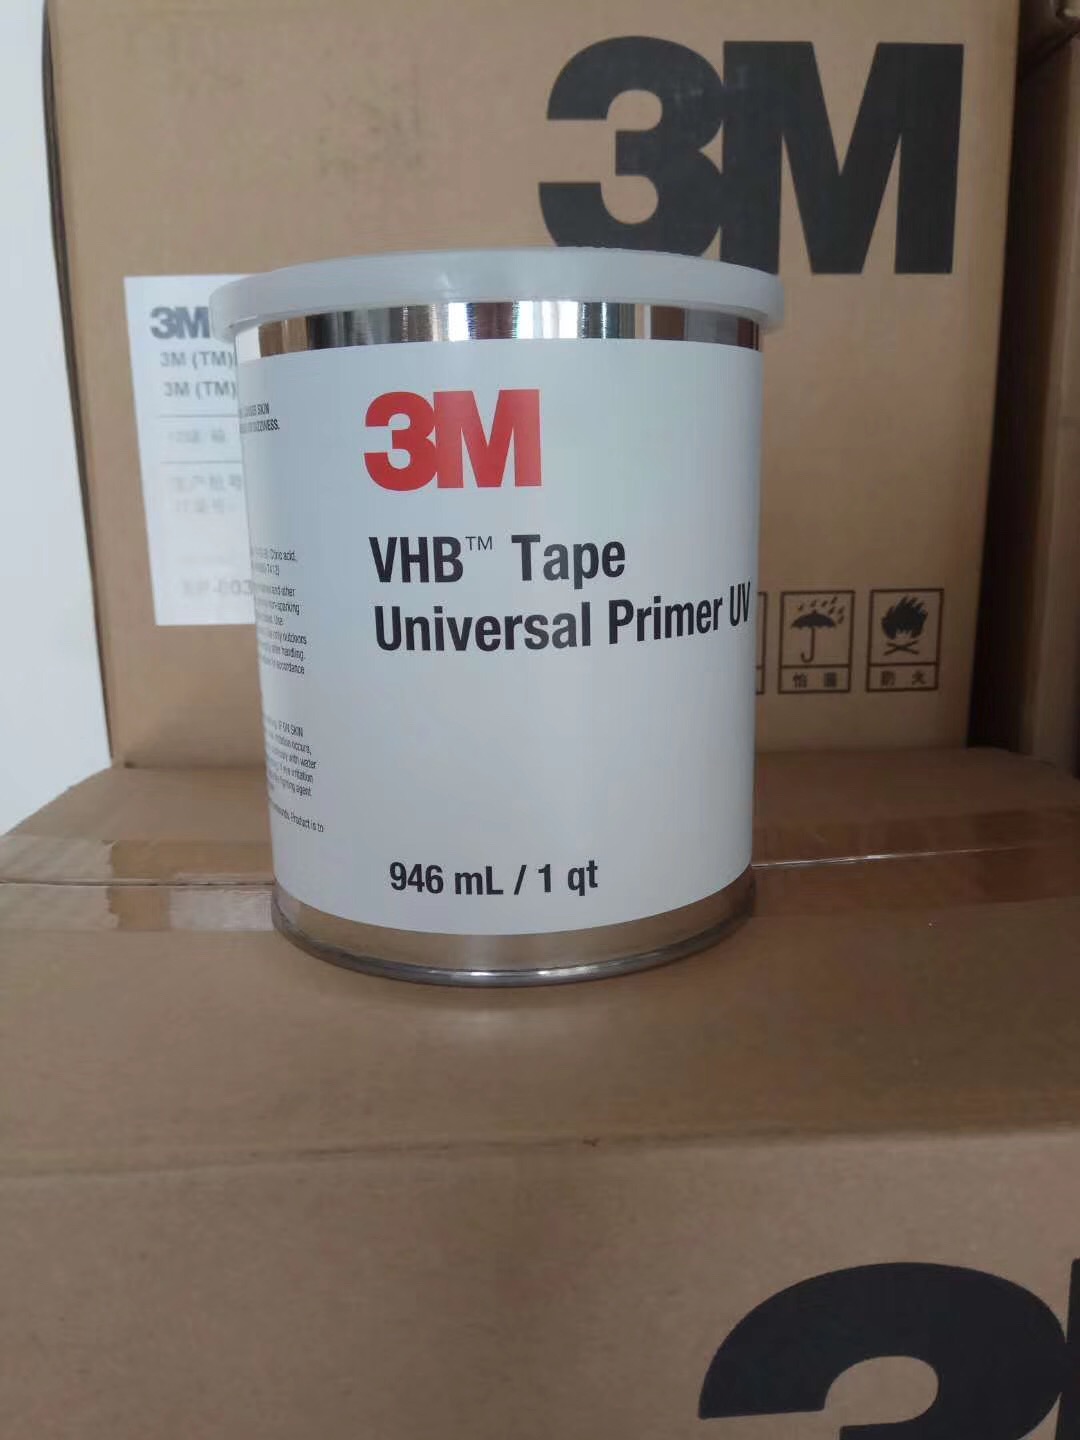 VHB tape